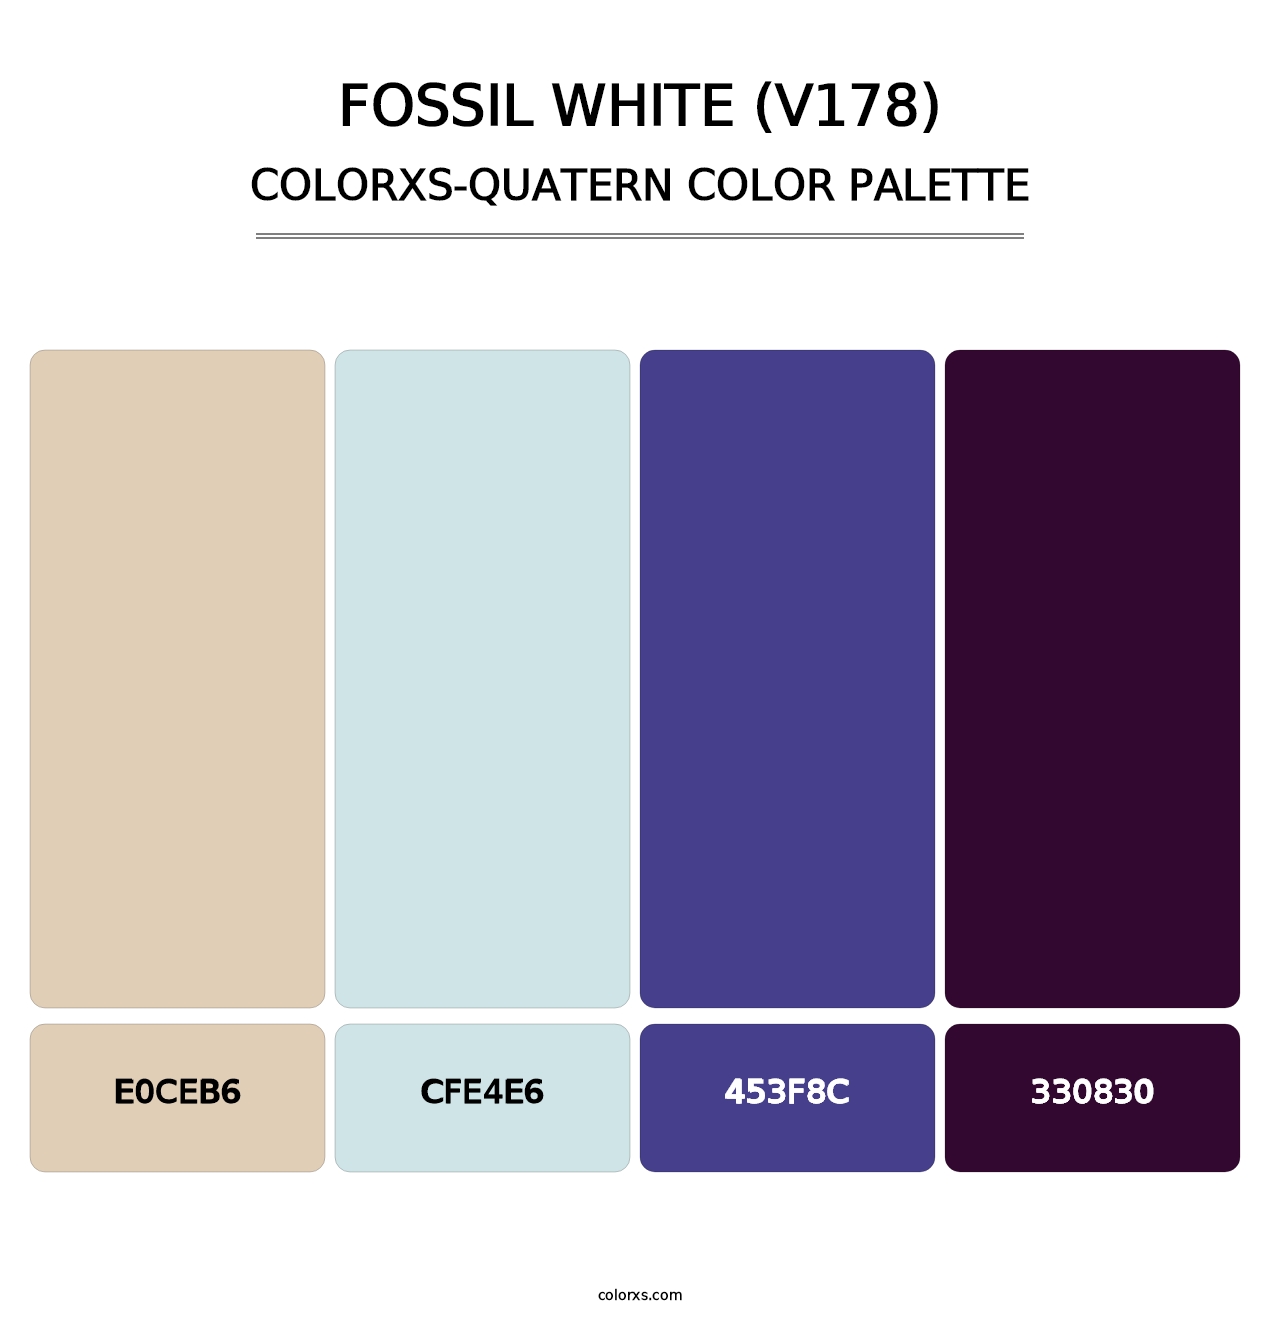 Fossil White (V178) - Colorxs Quatern Palette